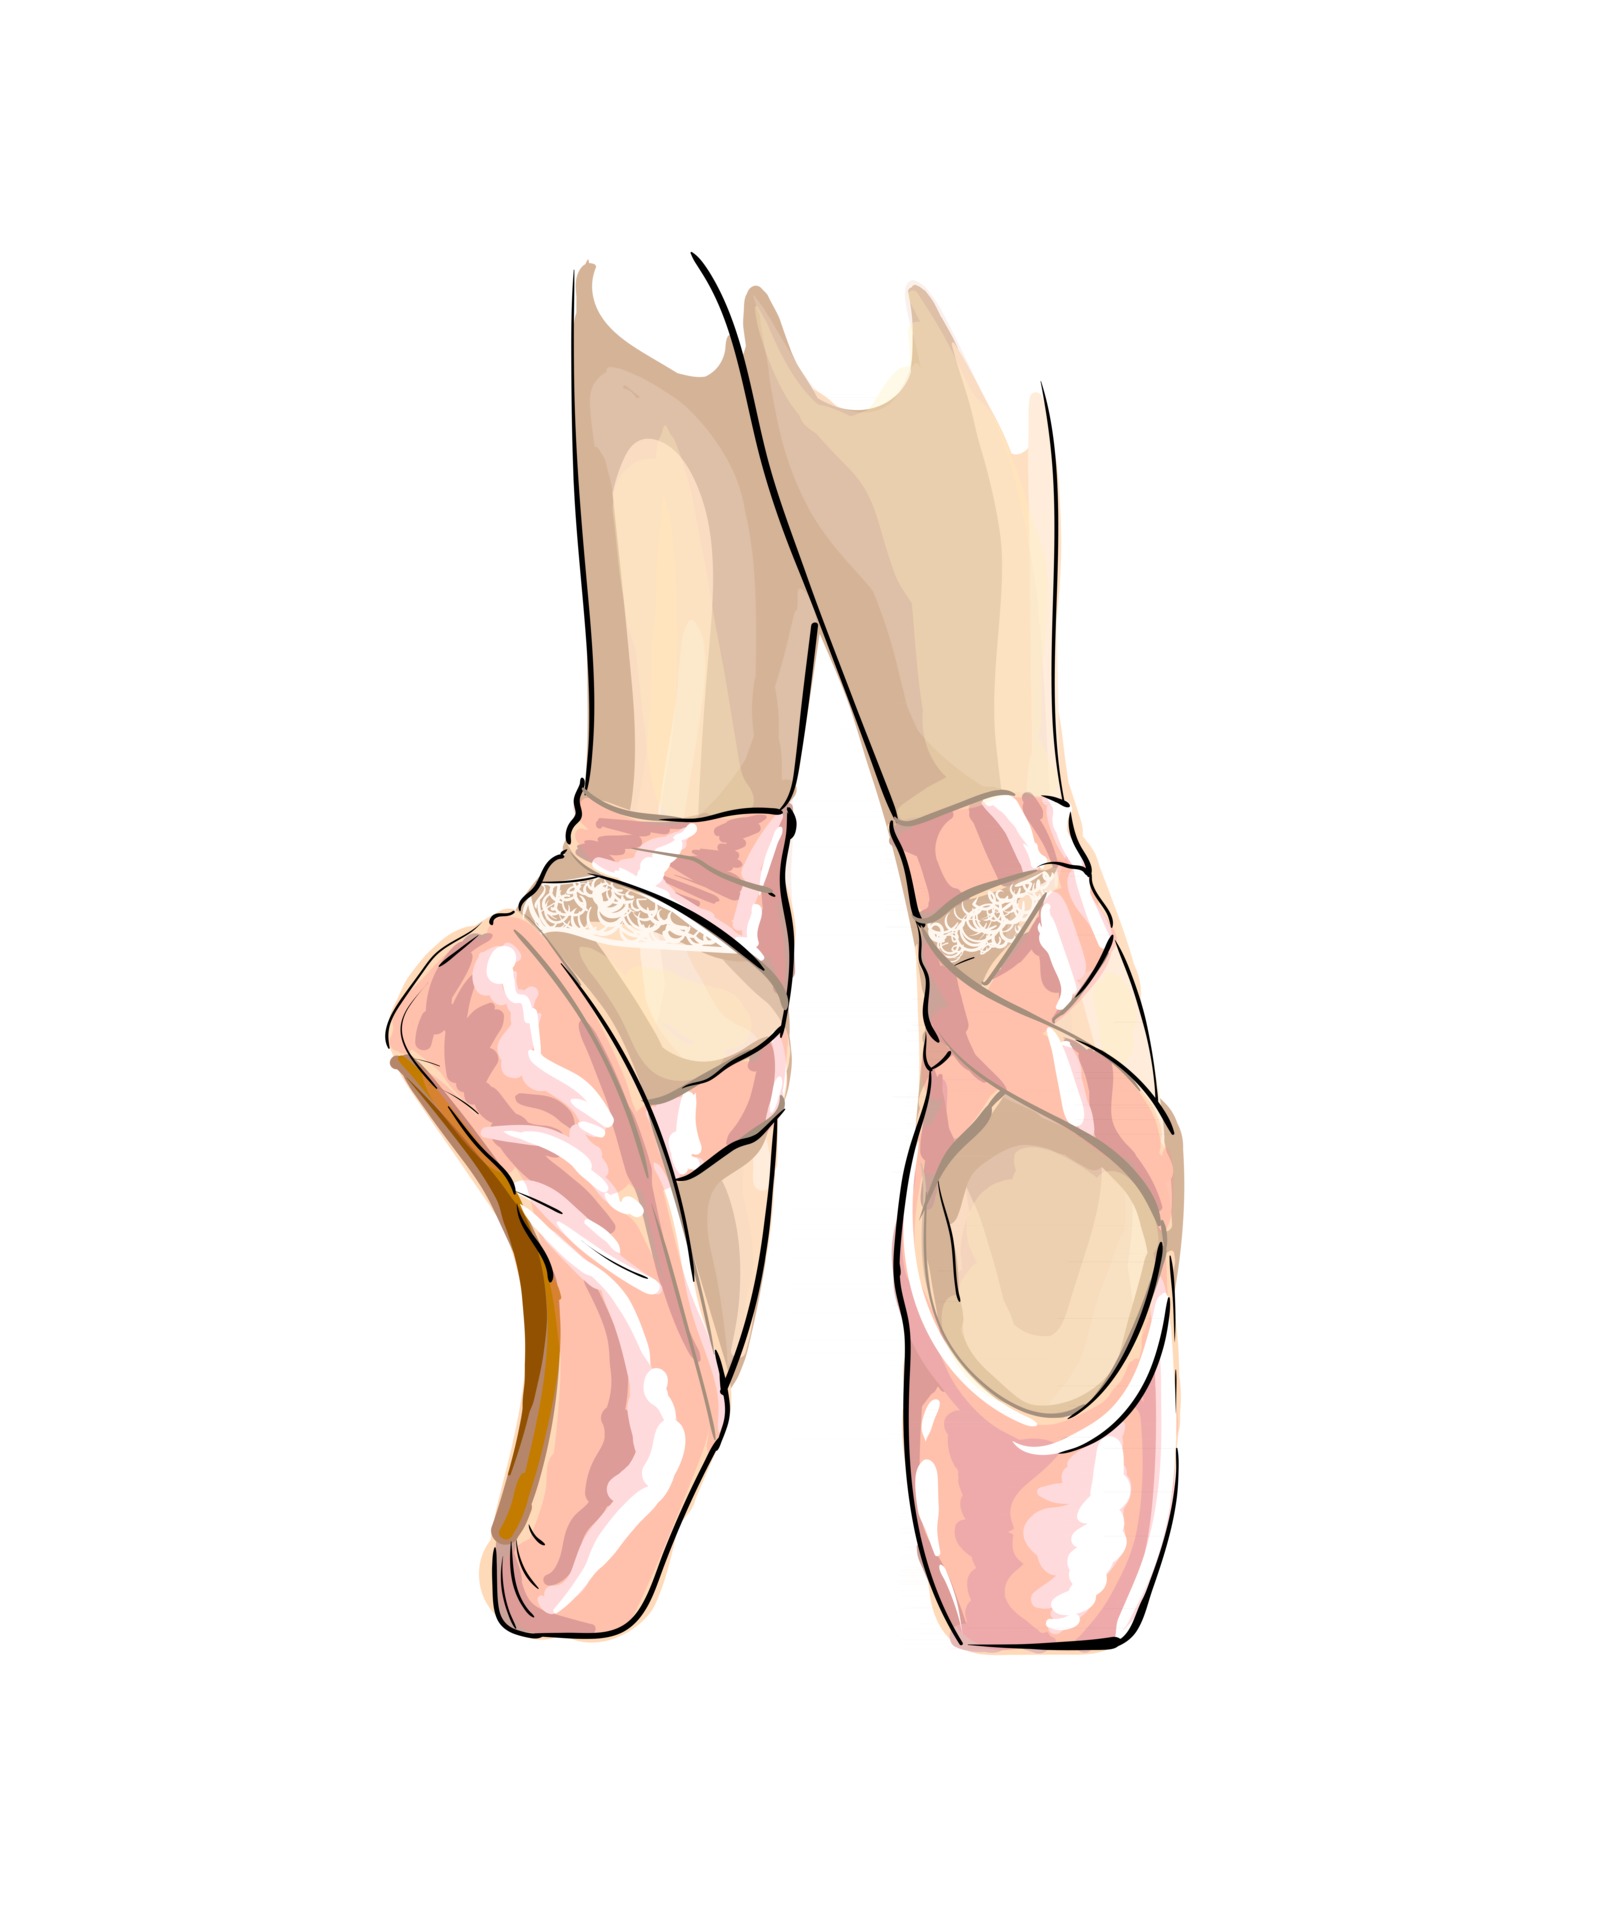 Premium Vector  Pointe shoes ballet shoes ballet dance studio symbol ballerina  pointe shoes vector sketch